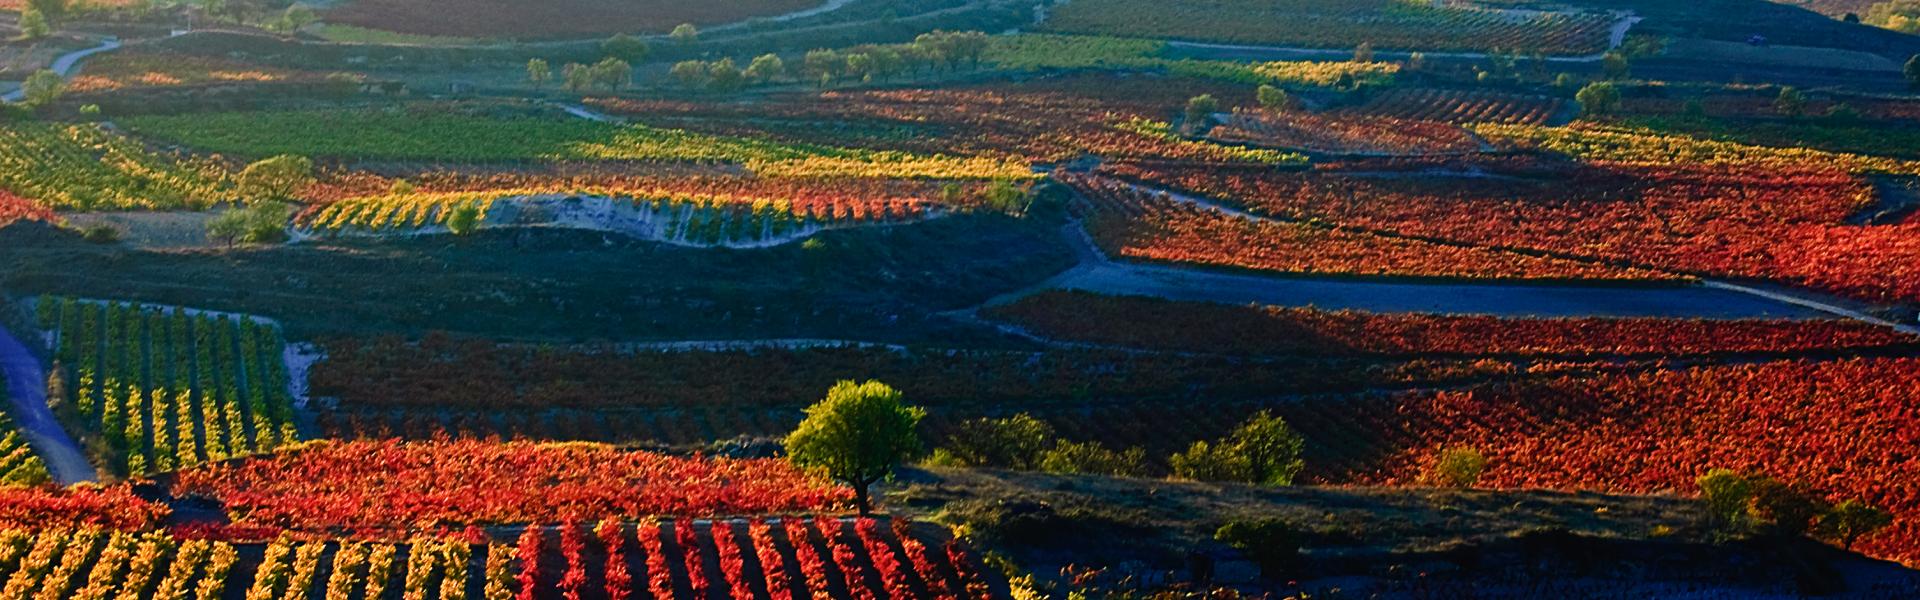 Wineyard in Haro, La Rioja